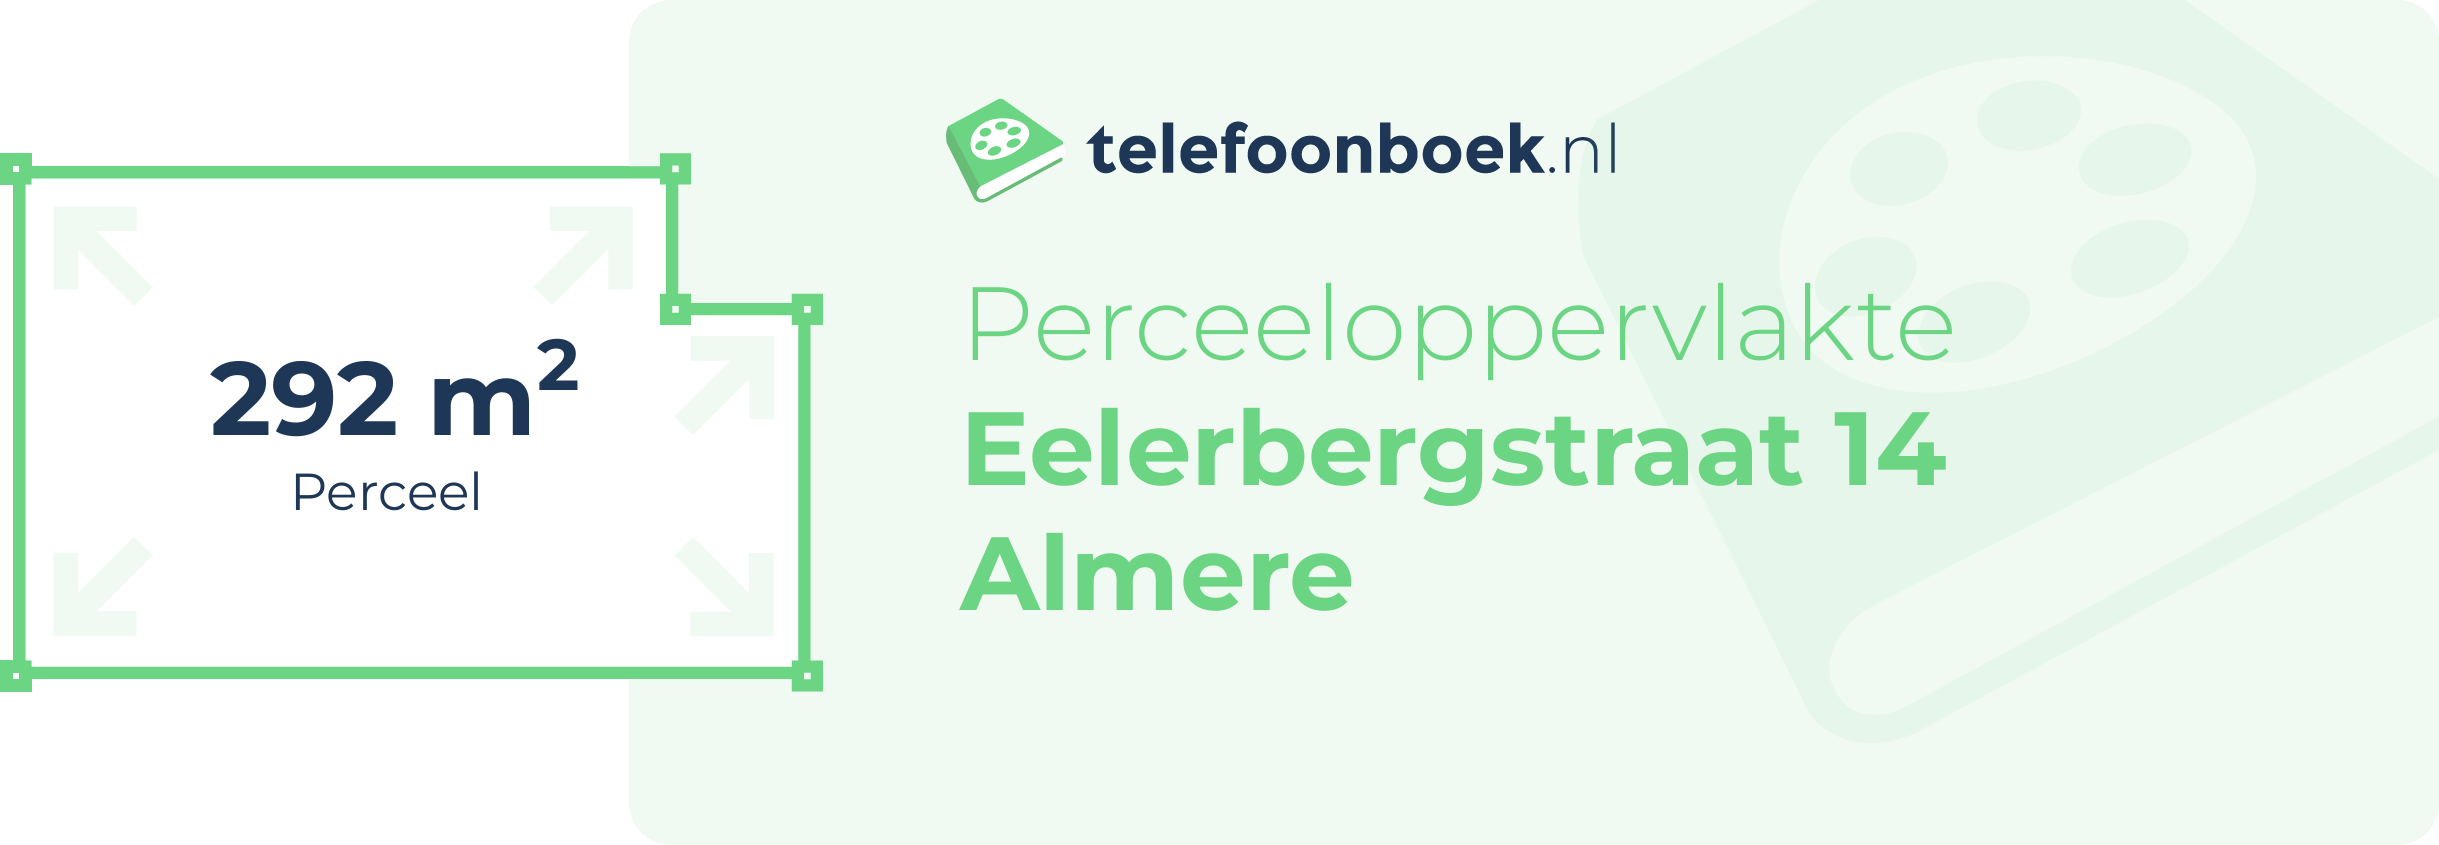 Perceeloppervlakte Eelerbergstraat 14 Almere